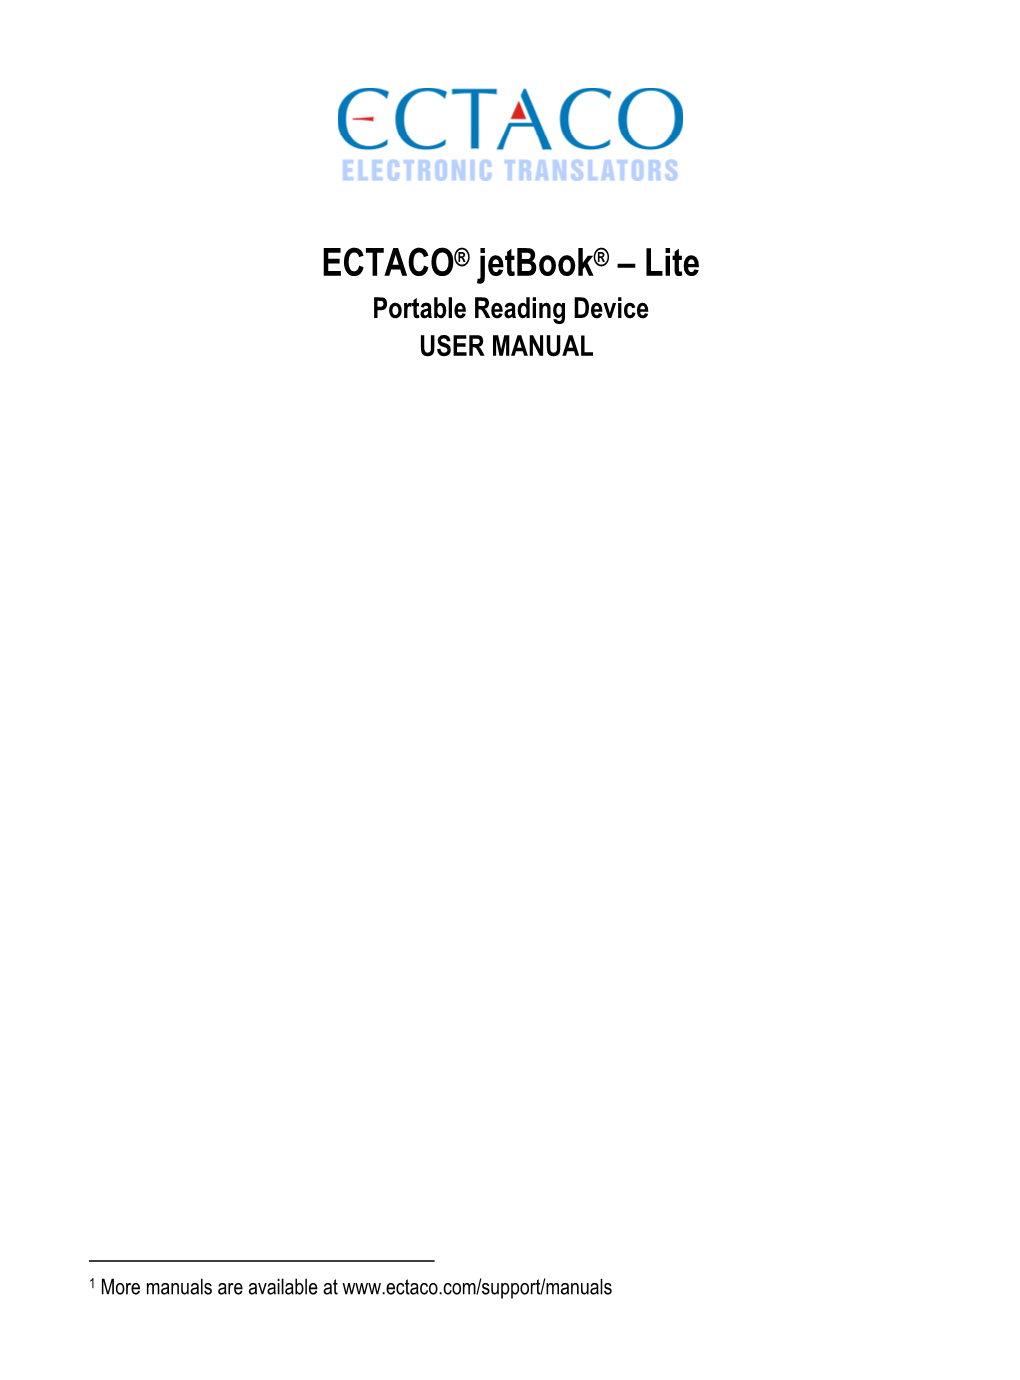 ECTACO Jetbook-Lite – User Manual